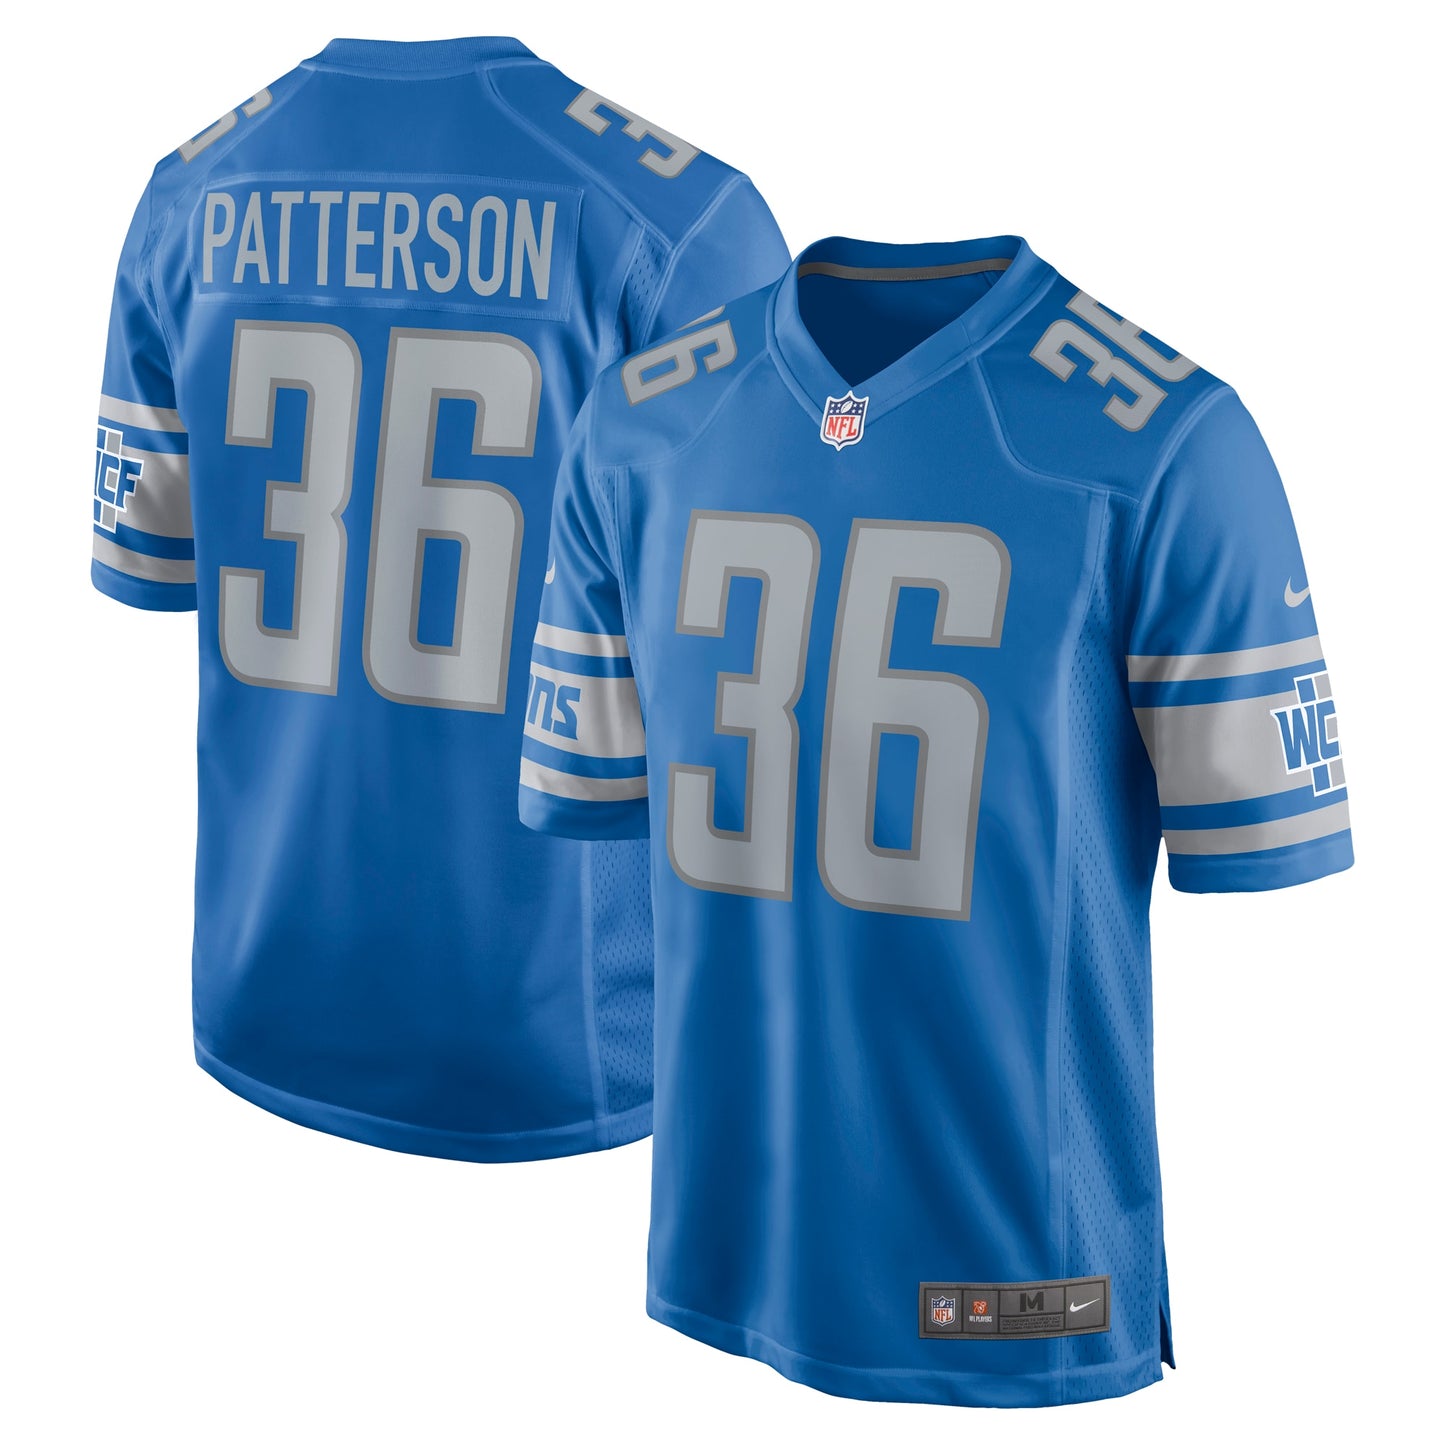 Riley Patterson Detroit Lions Nike Team Game Jersey - Blue